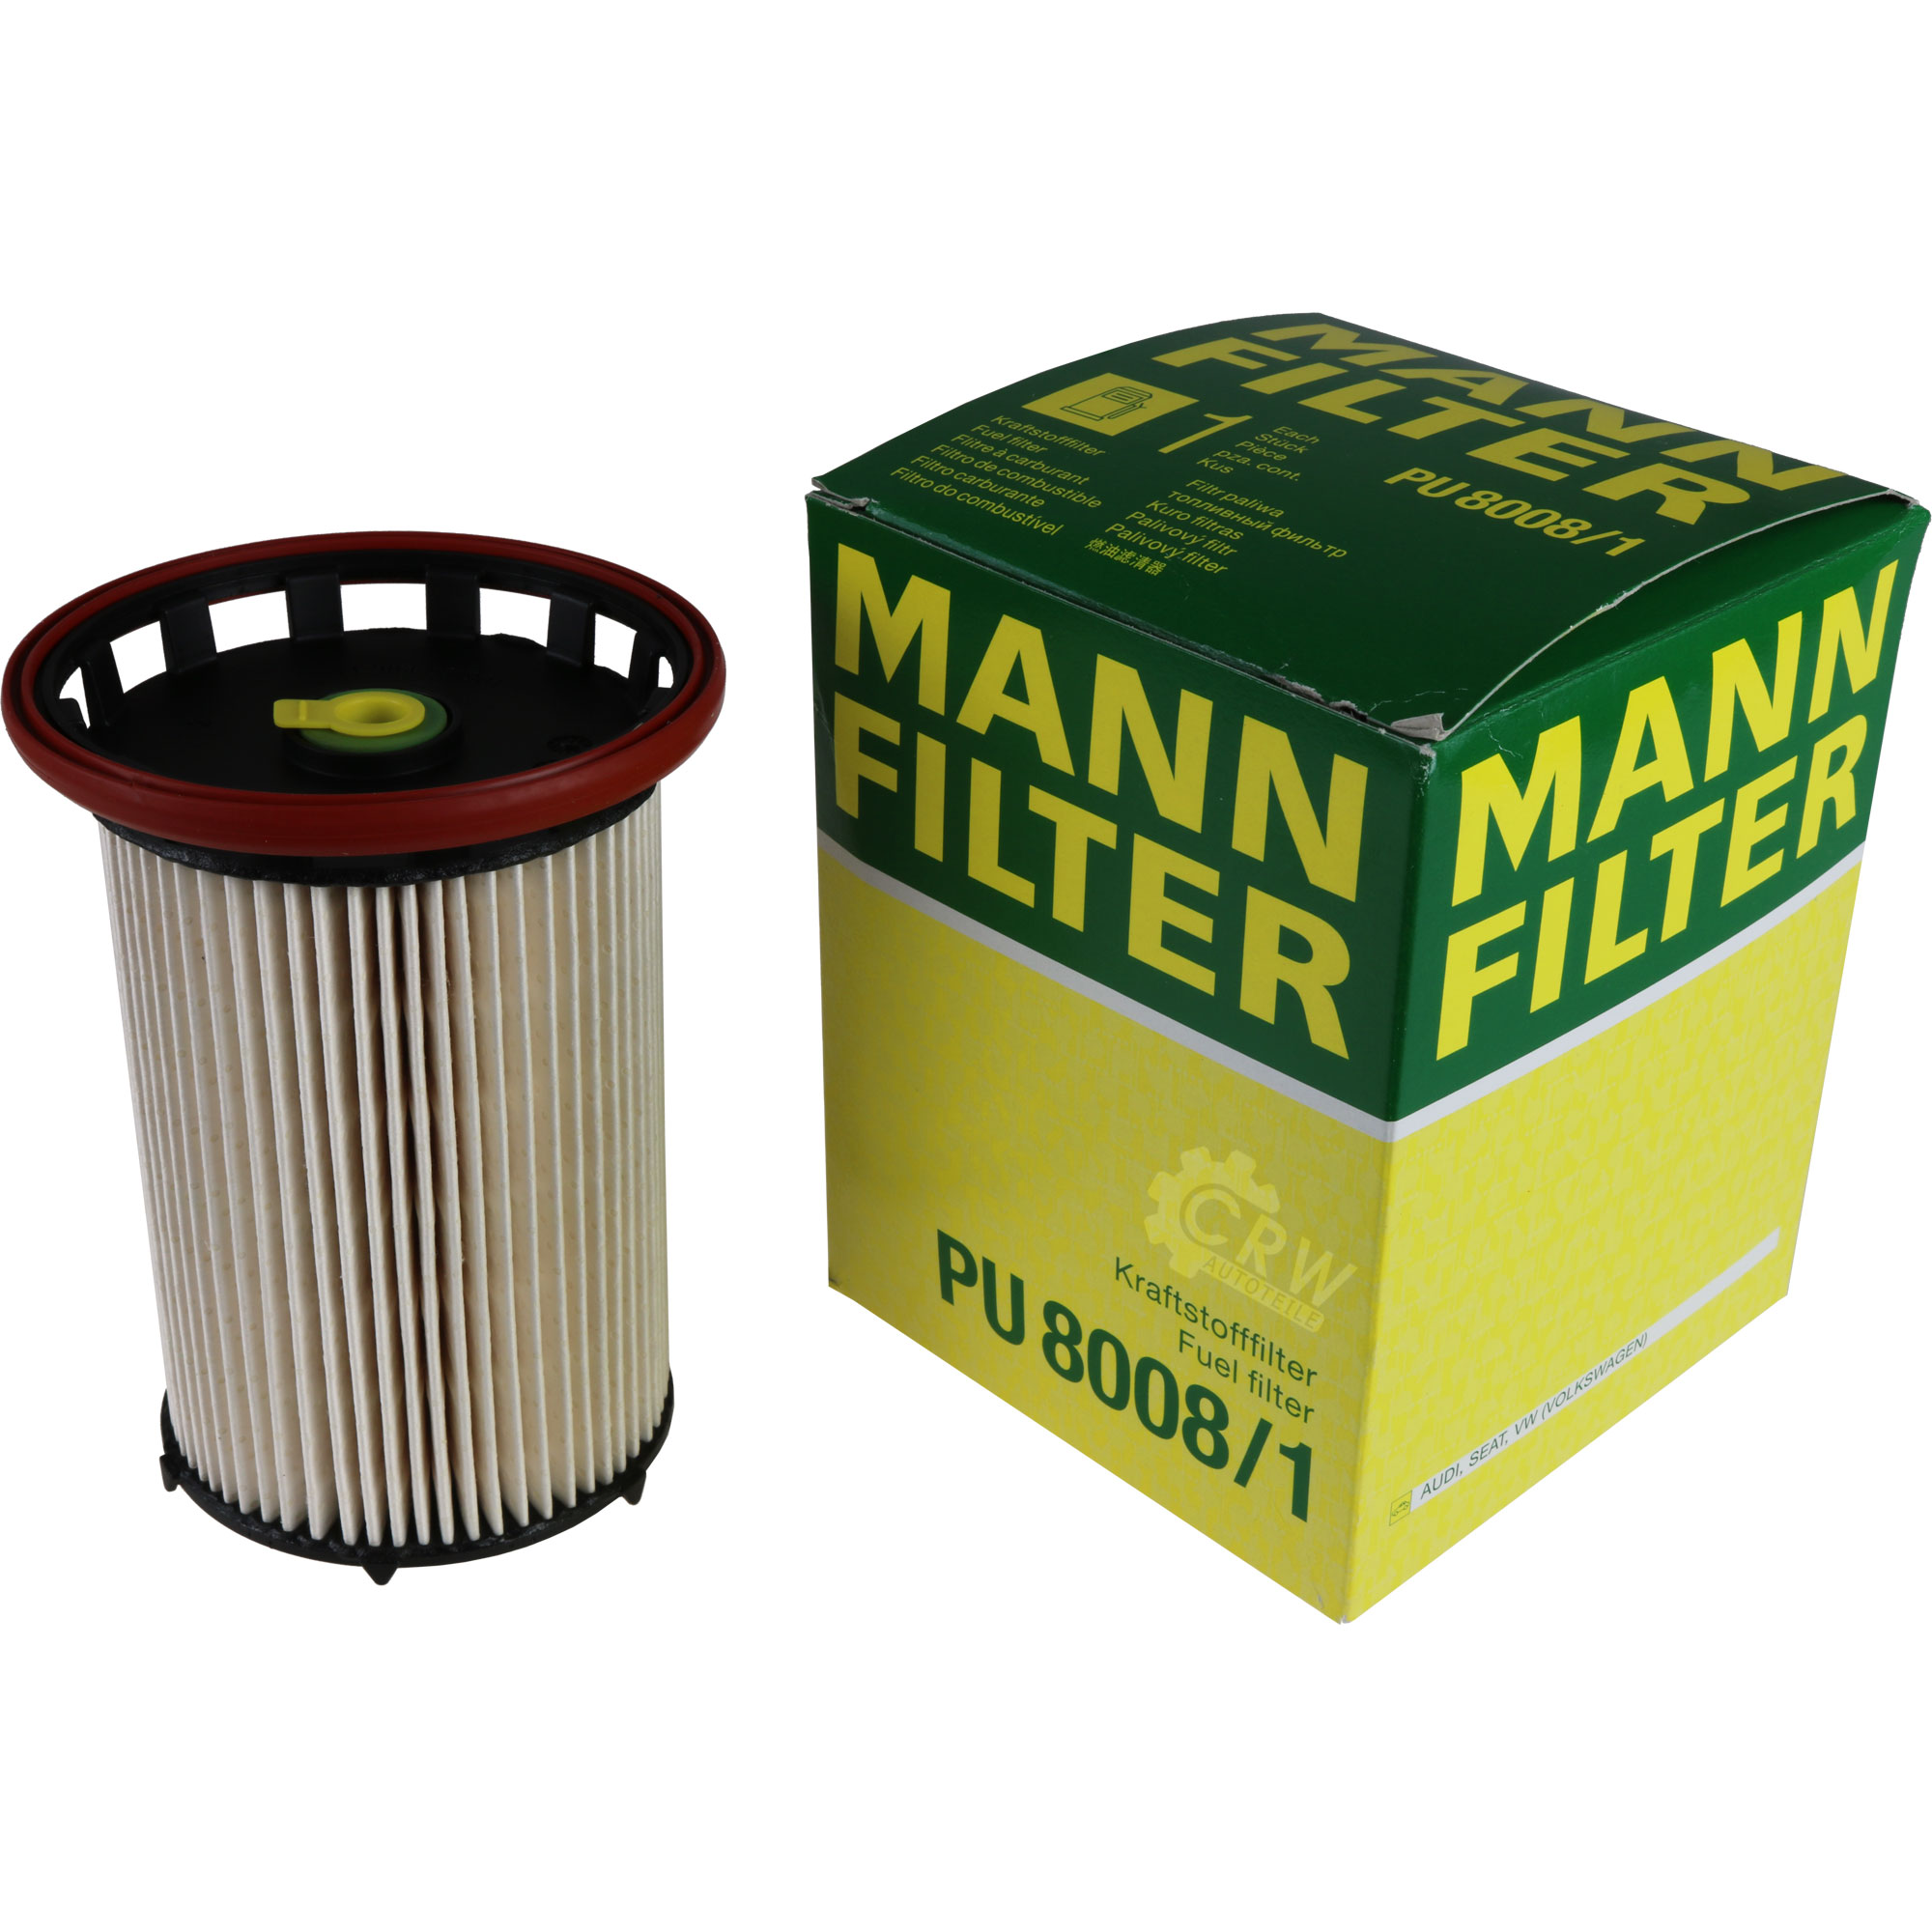 MANN-FILTER Kraftstofffilter PU 8008/1 Fuel Filter